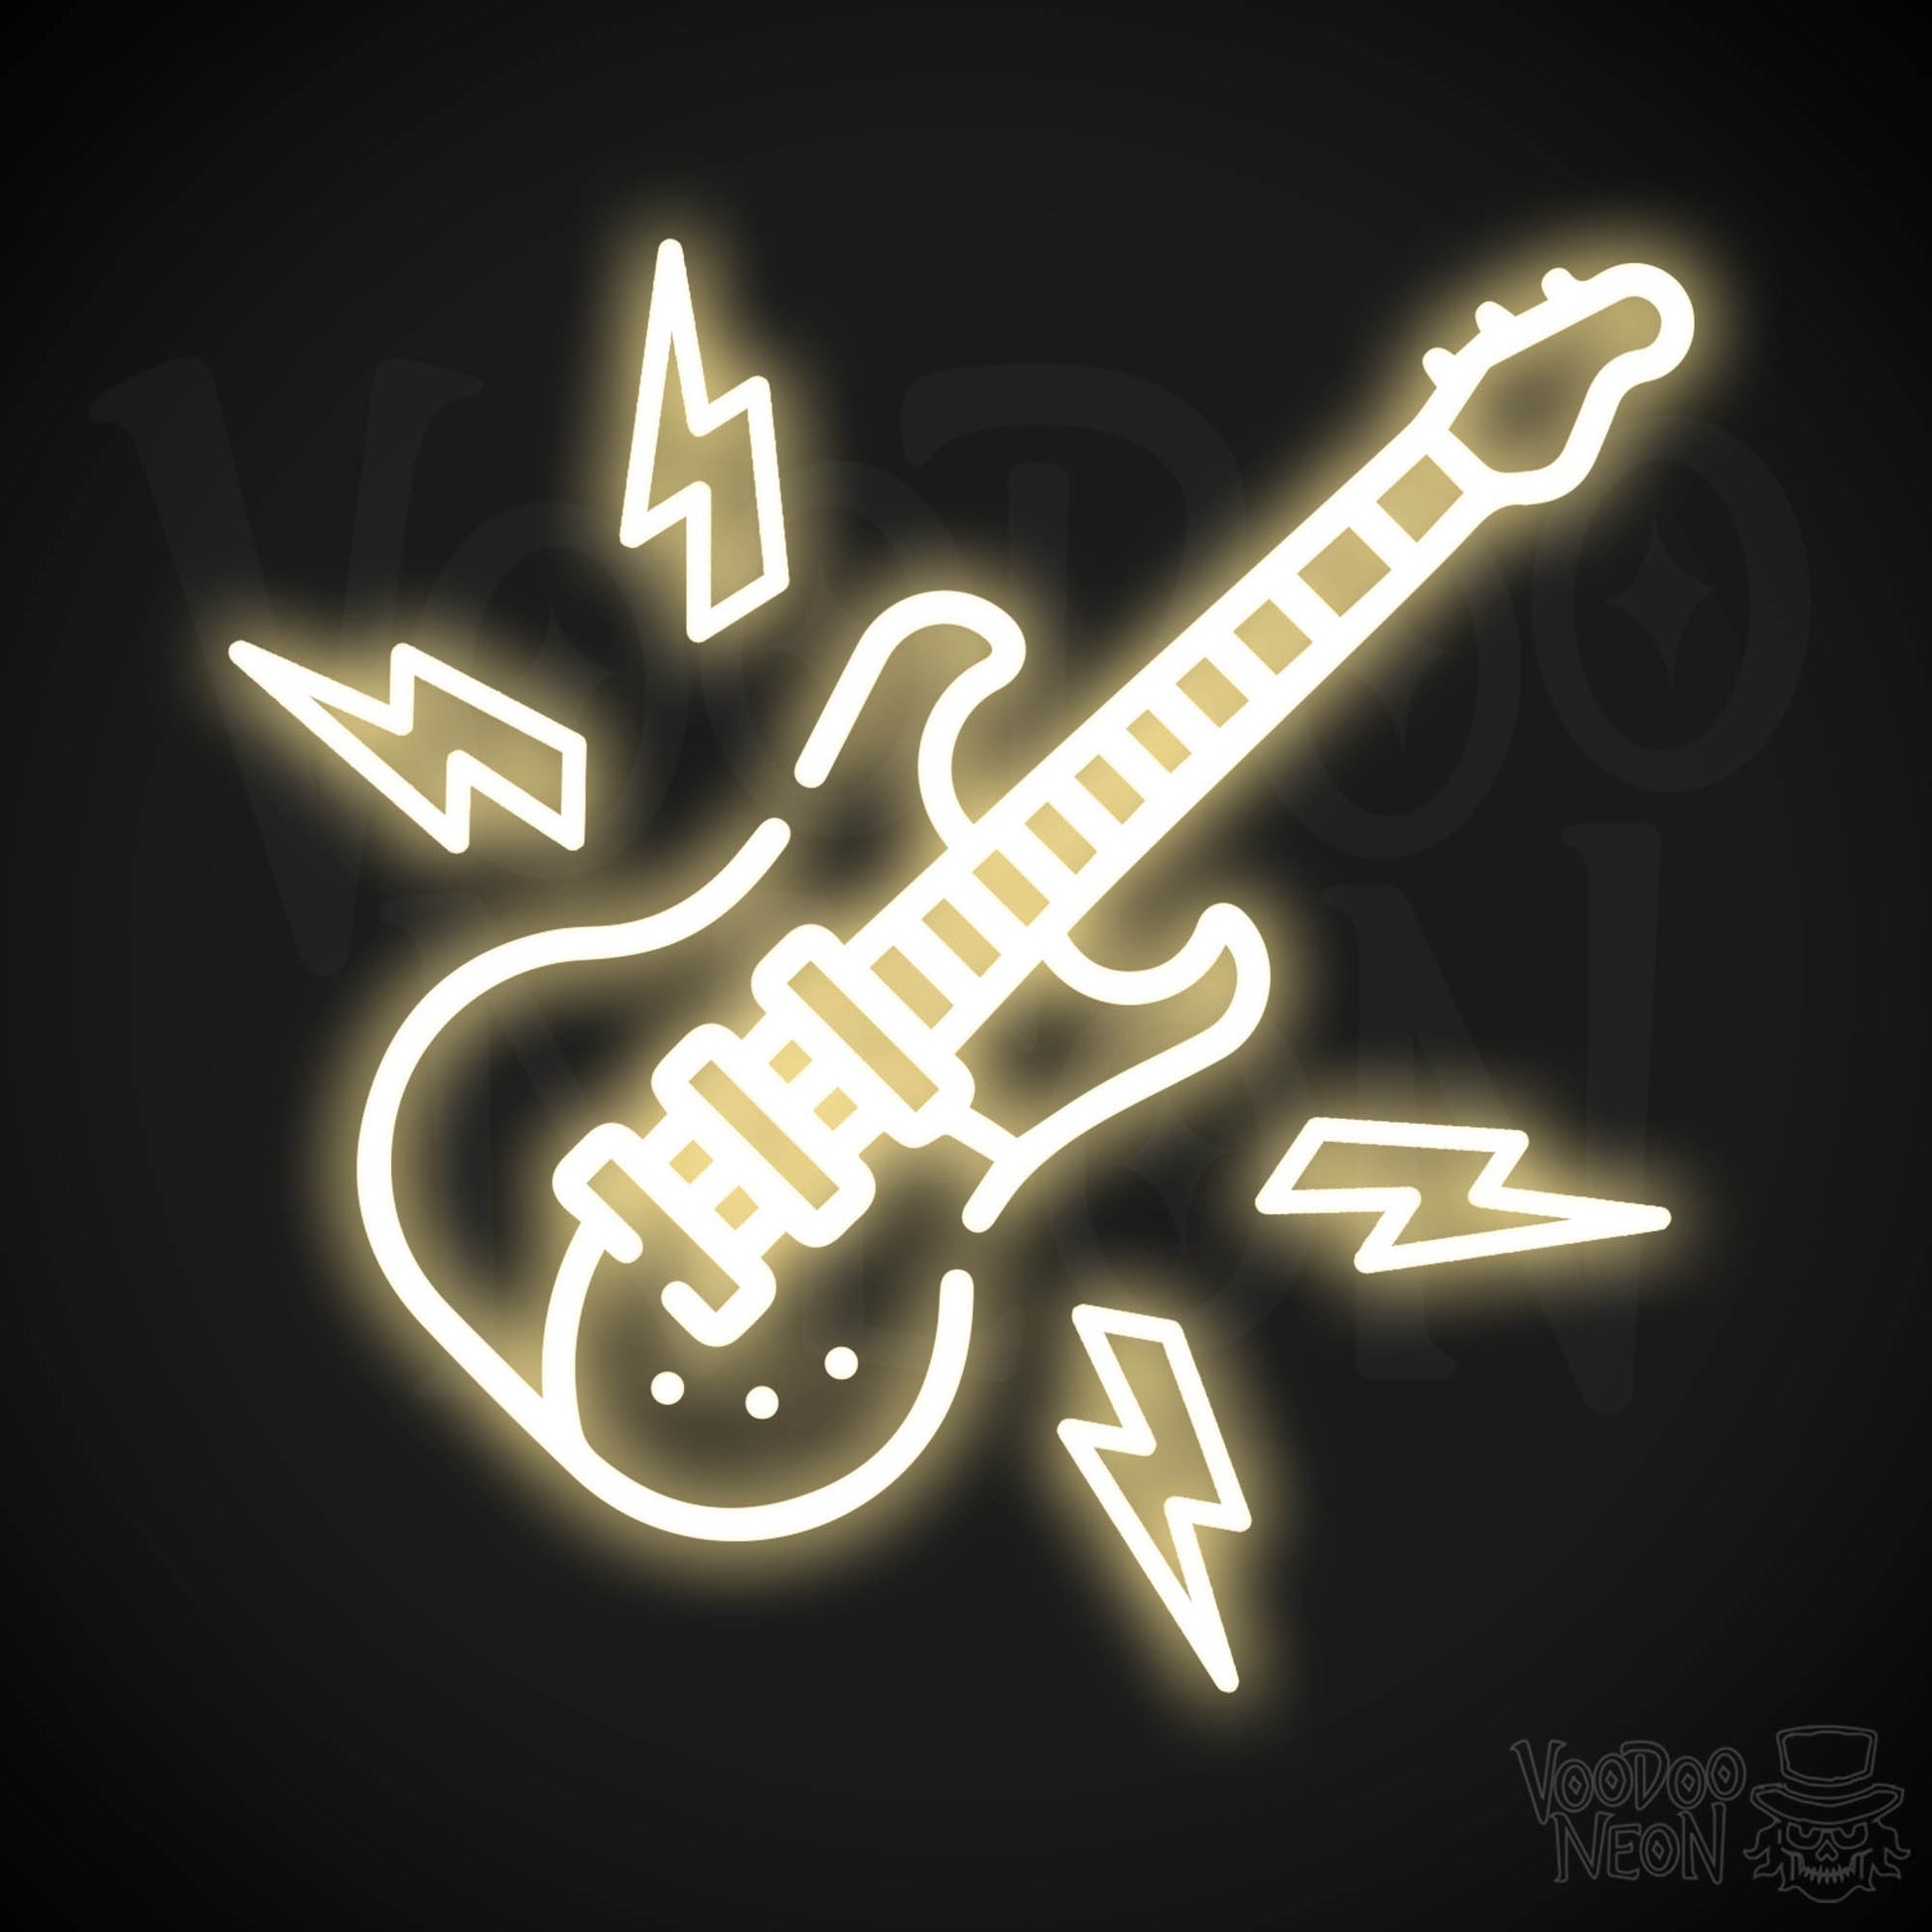 Neon Electric Guitar Sign - Electric Guitar Neon Sign - Electric Guitar Neon Wall Art - Color Warm White